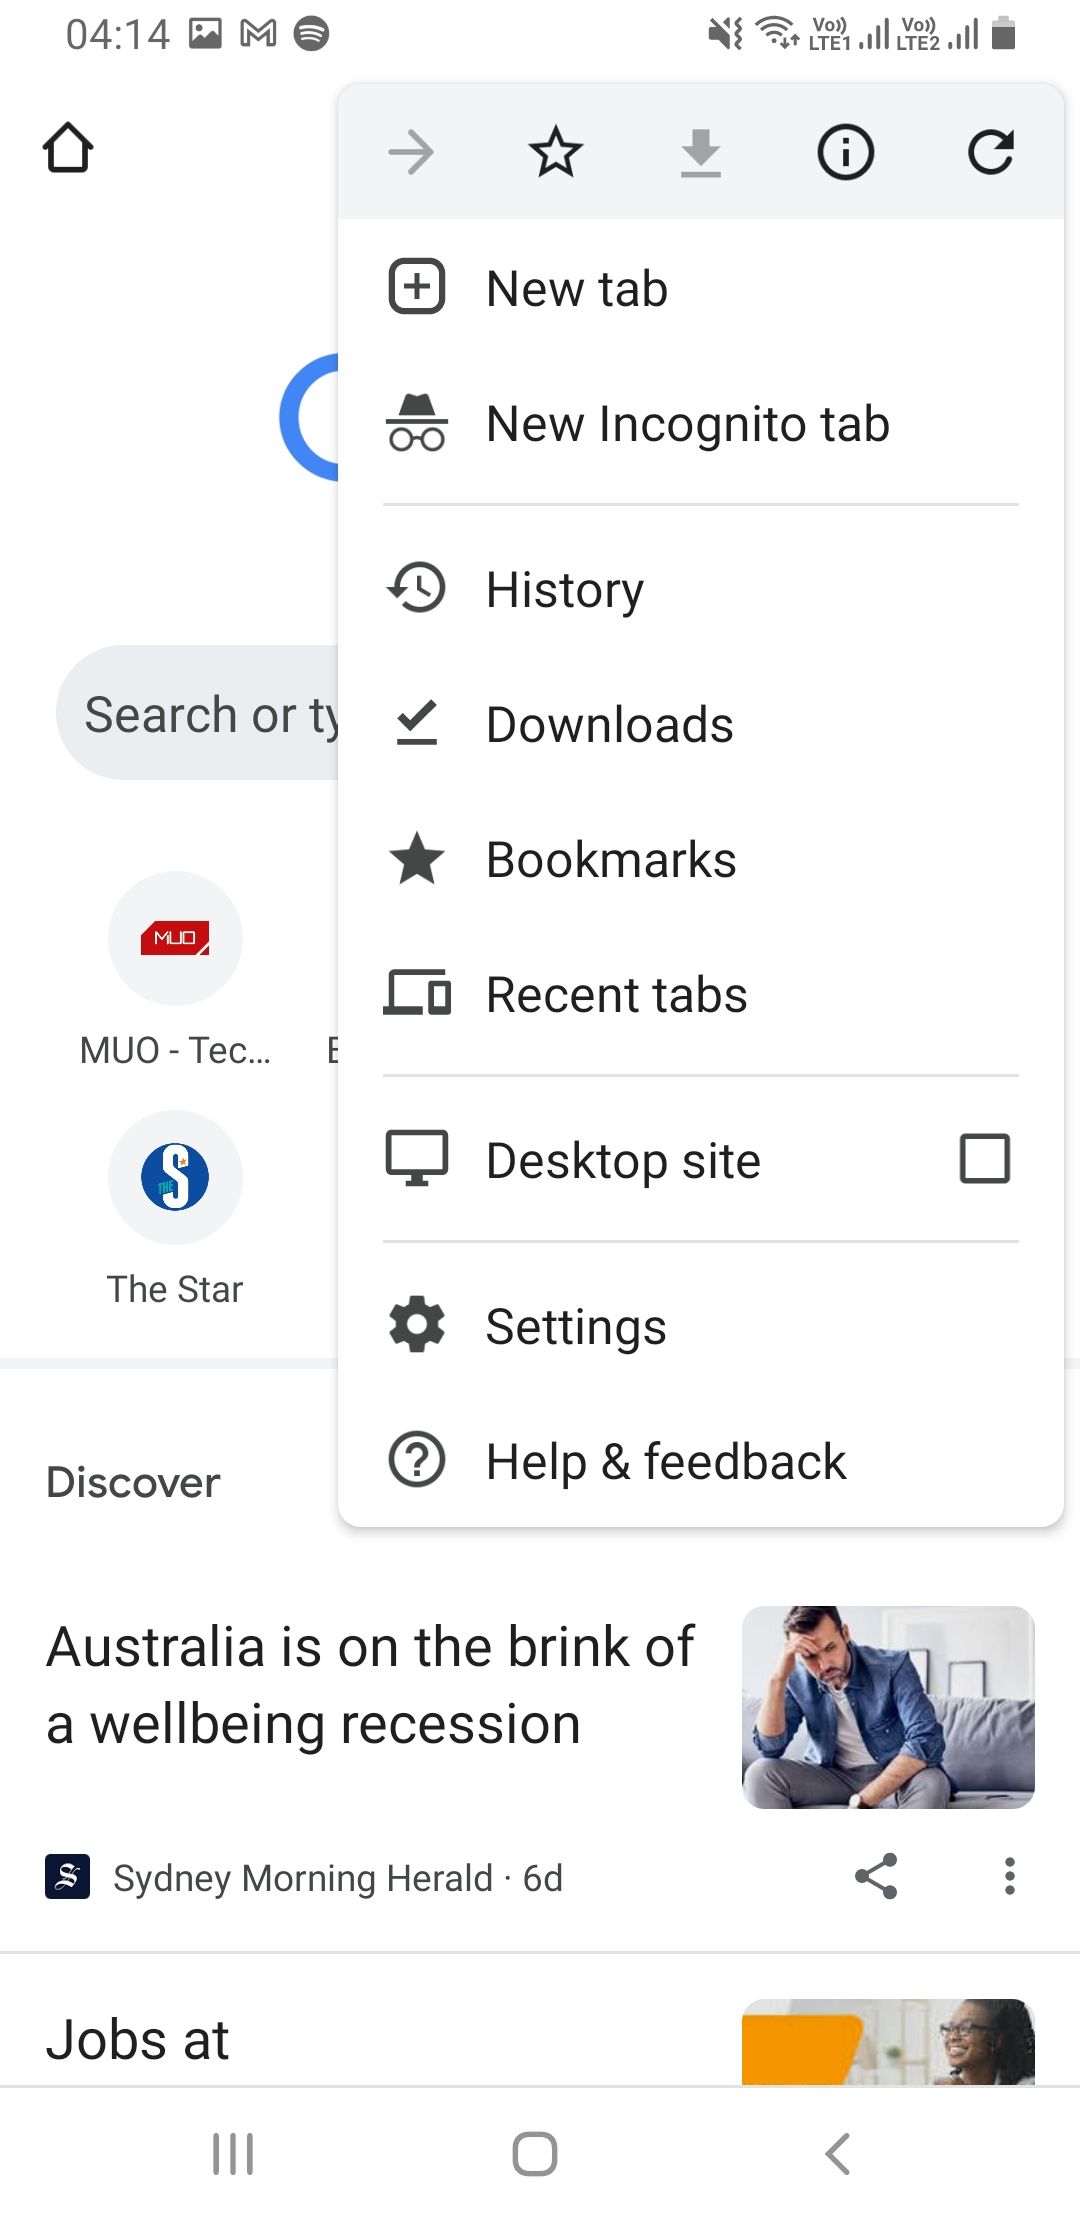 Chrome settings screenshot